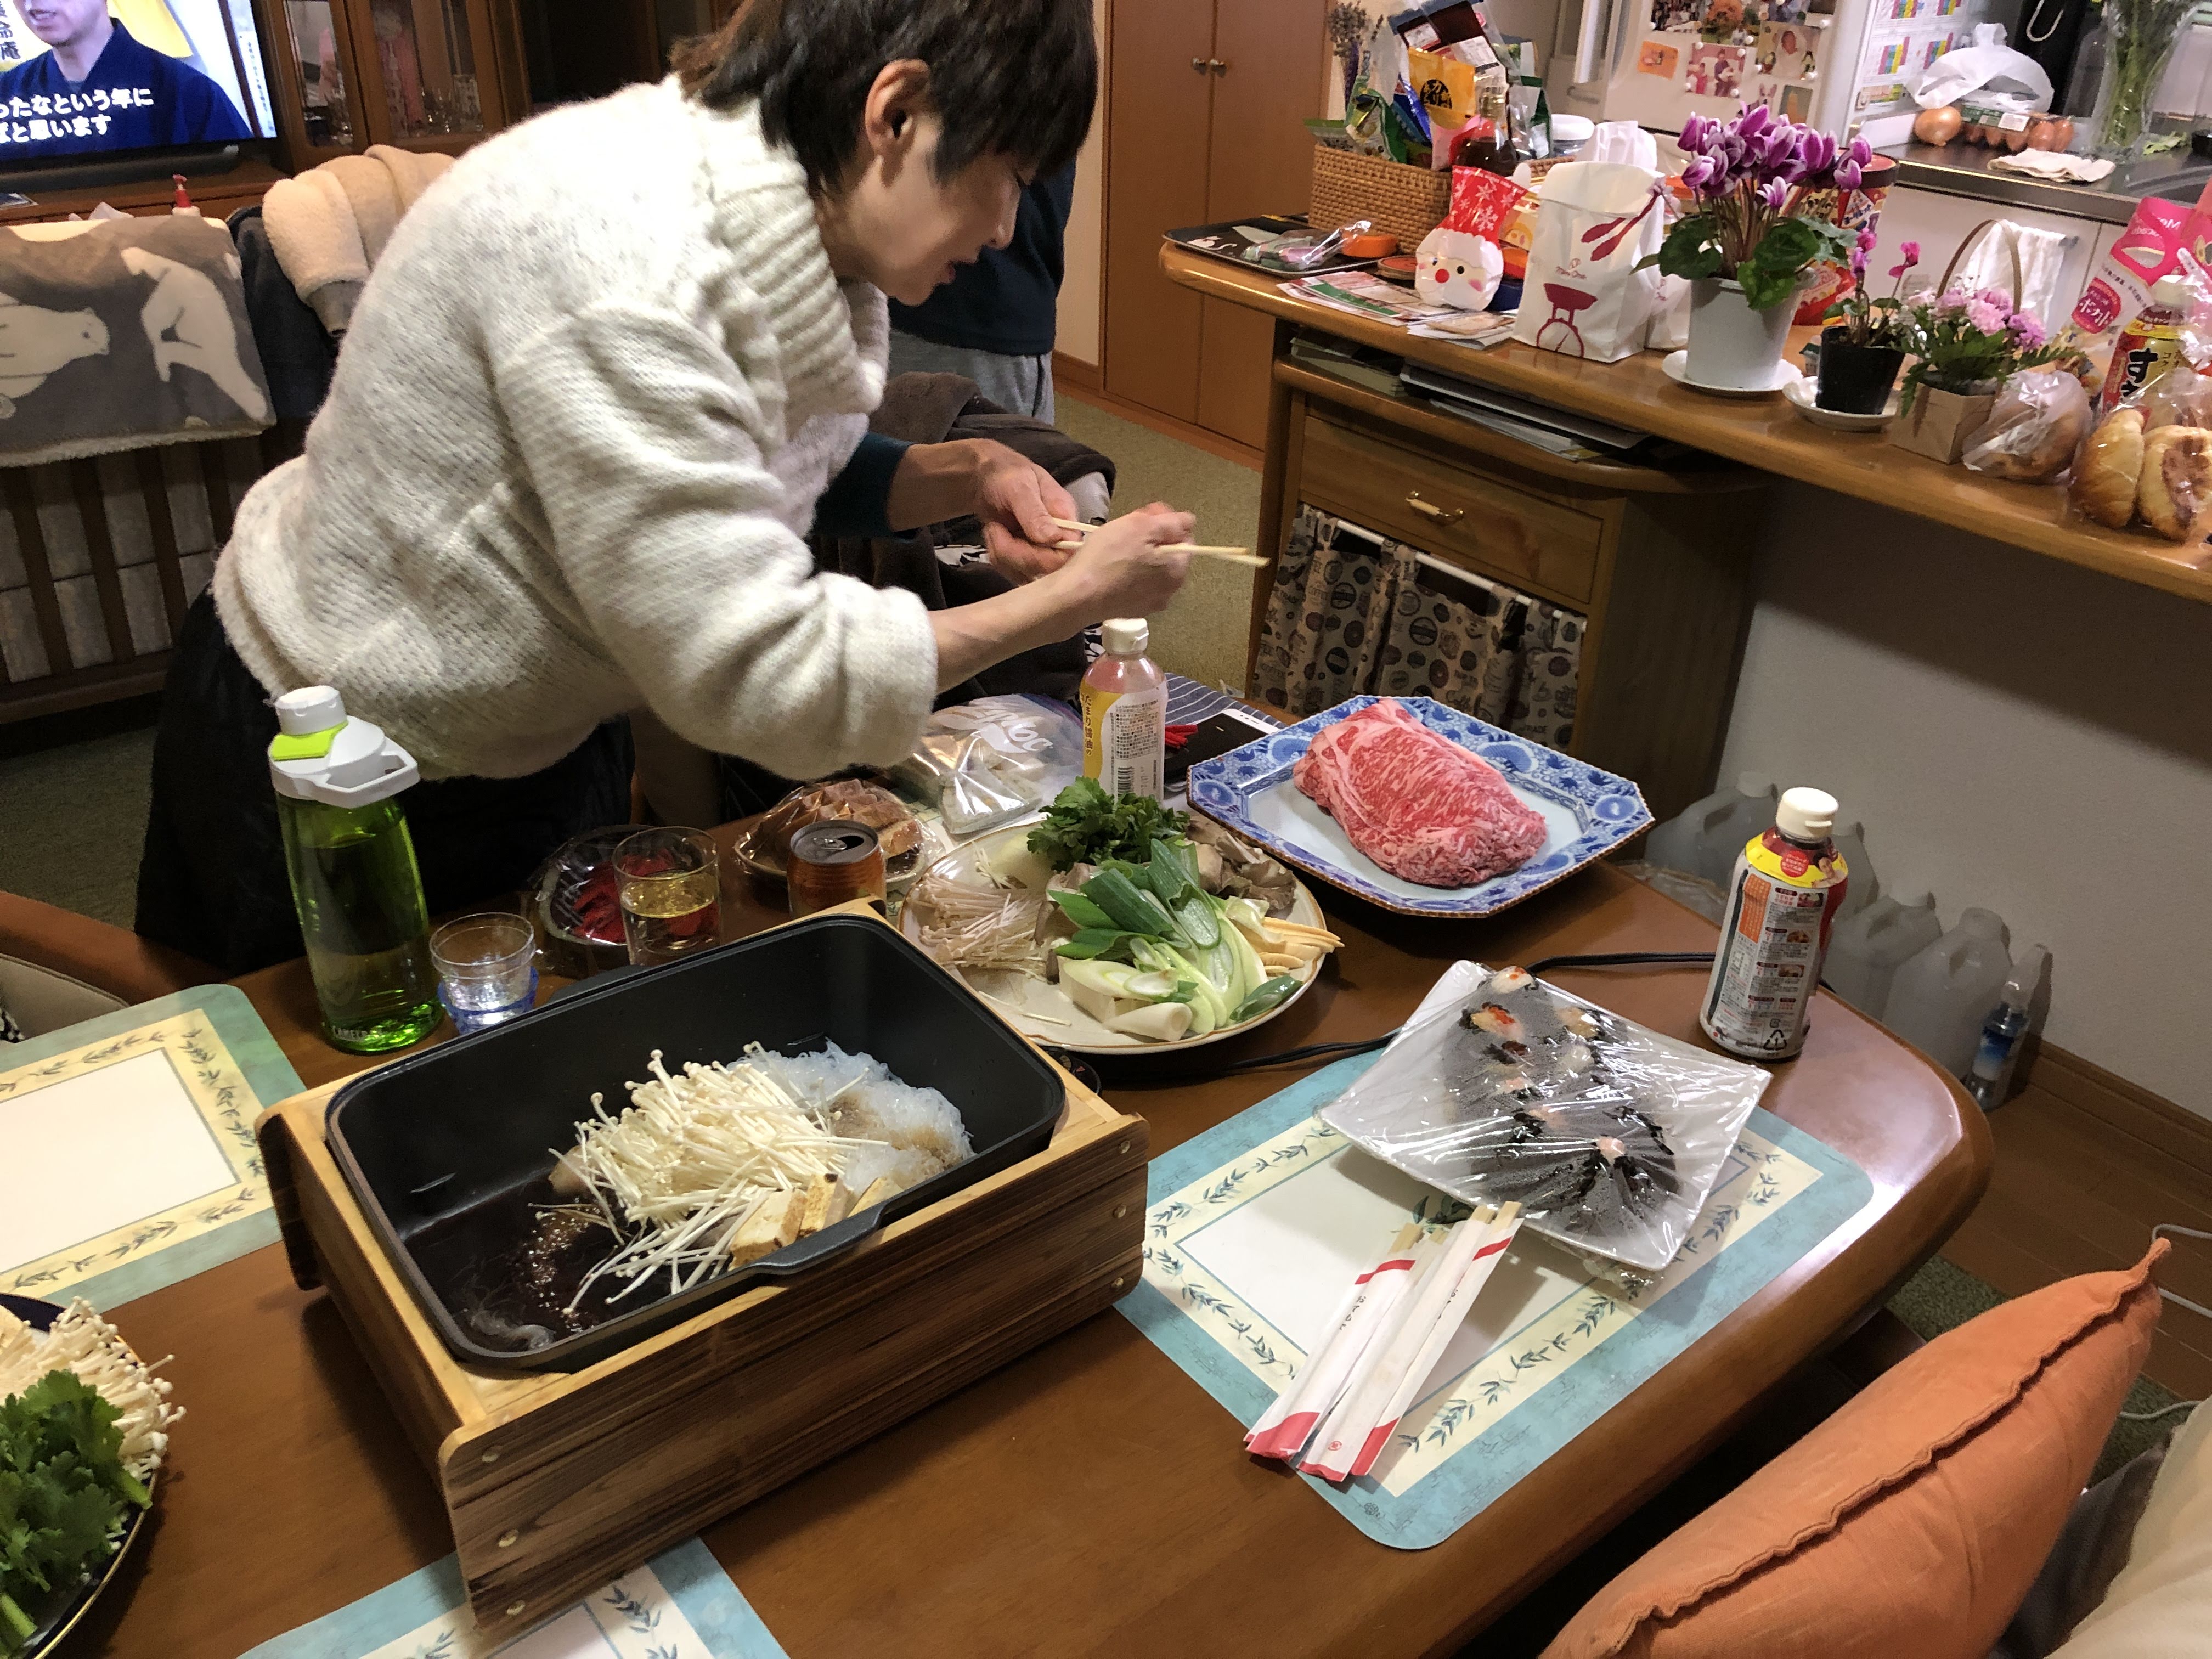 Yoko-nechan prepping the sukiyaki